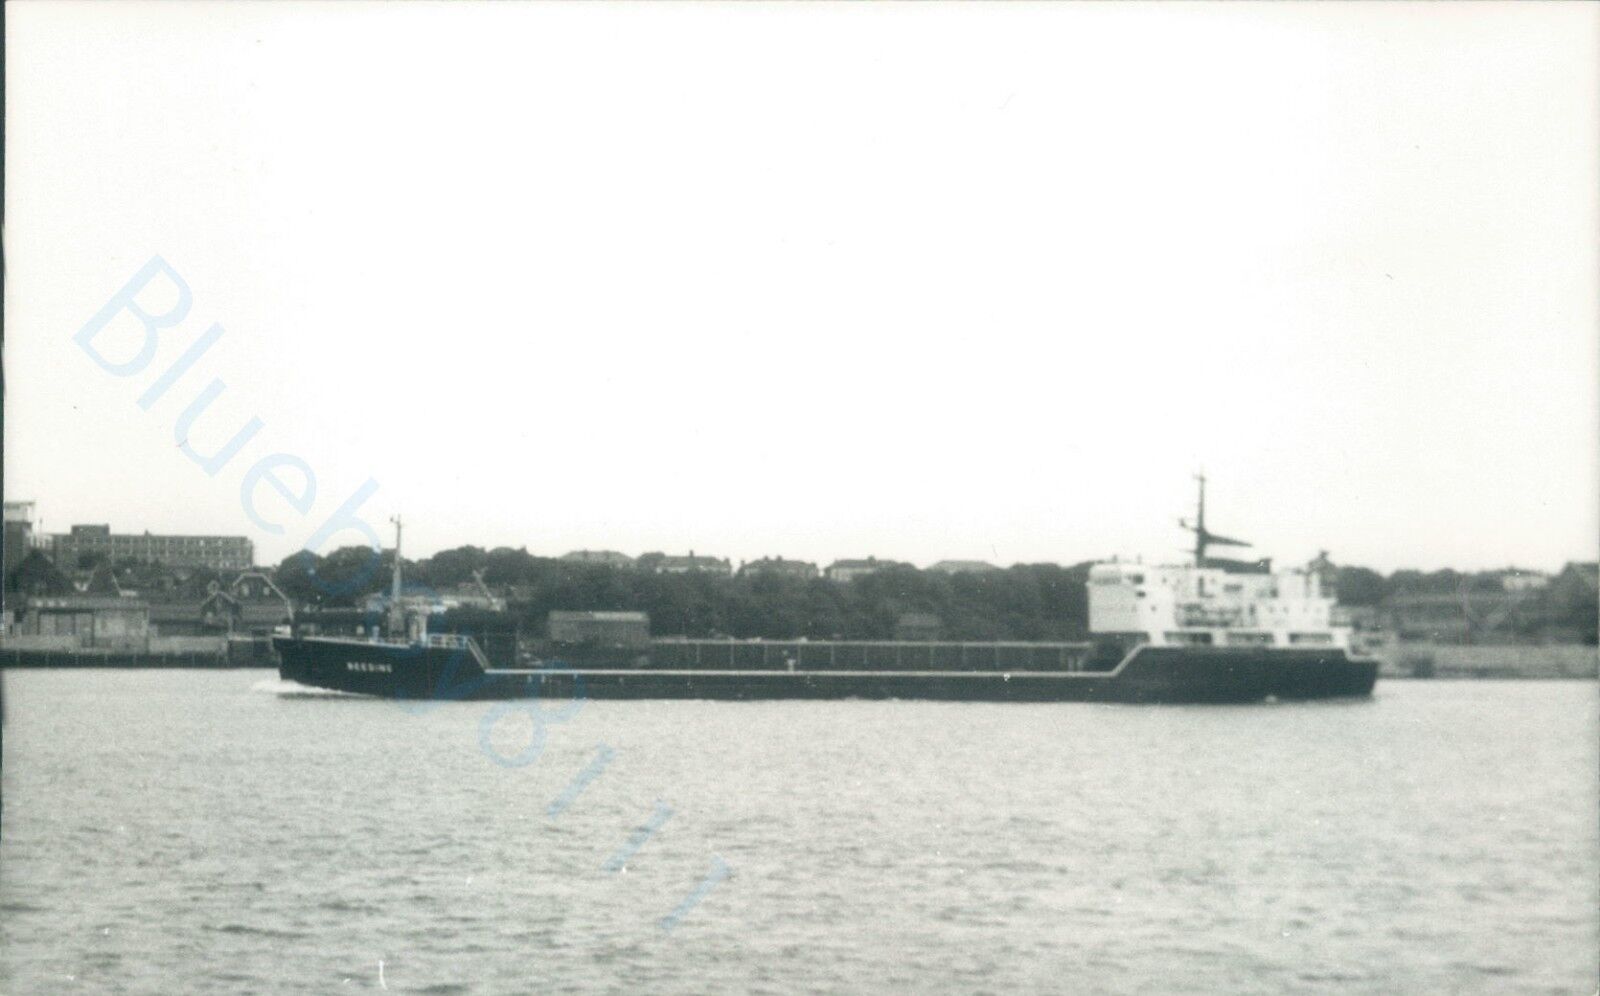 British MV Beeding off tilbury 1982 ship photo